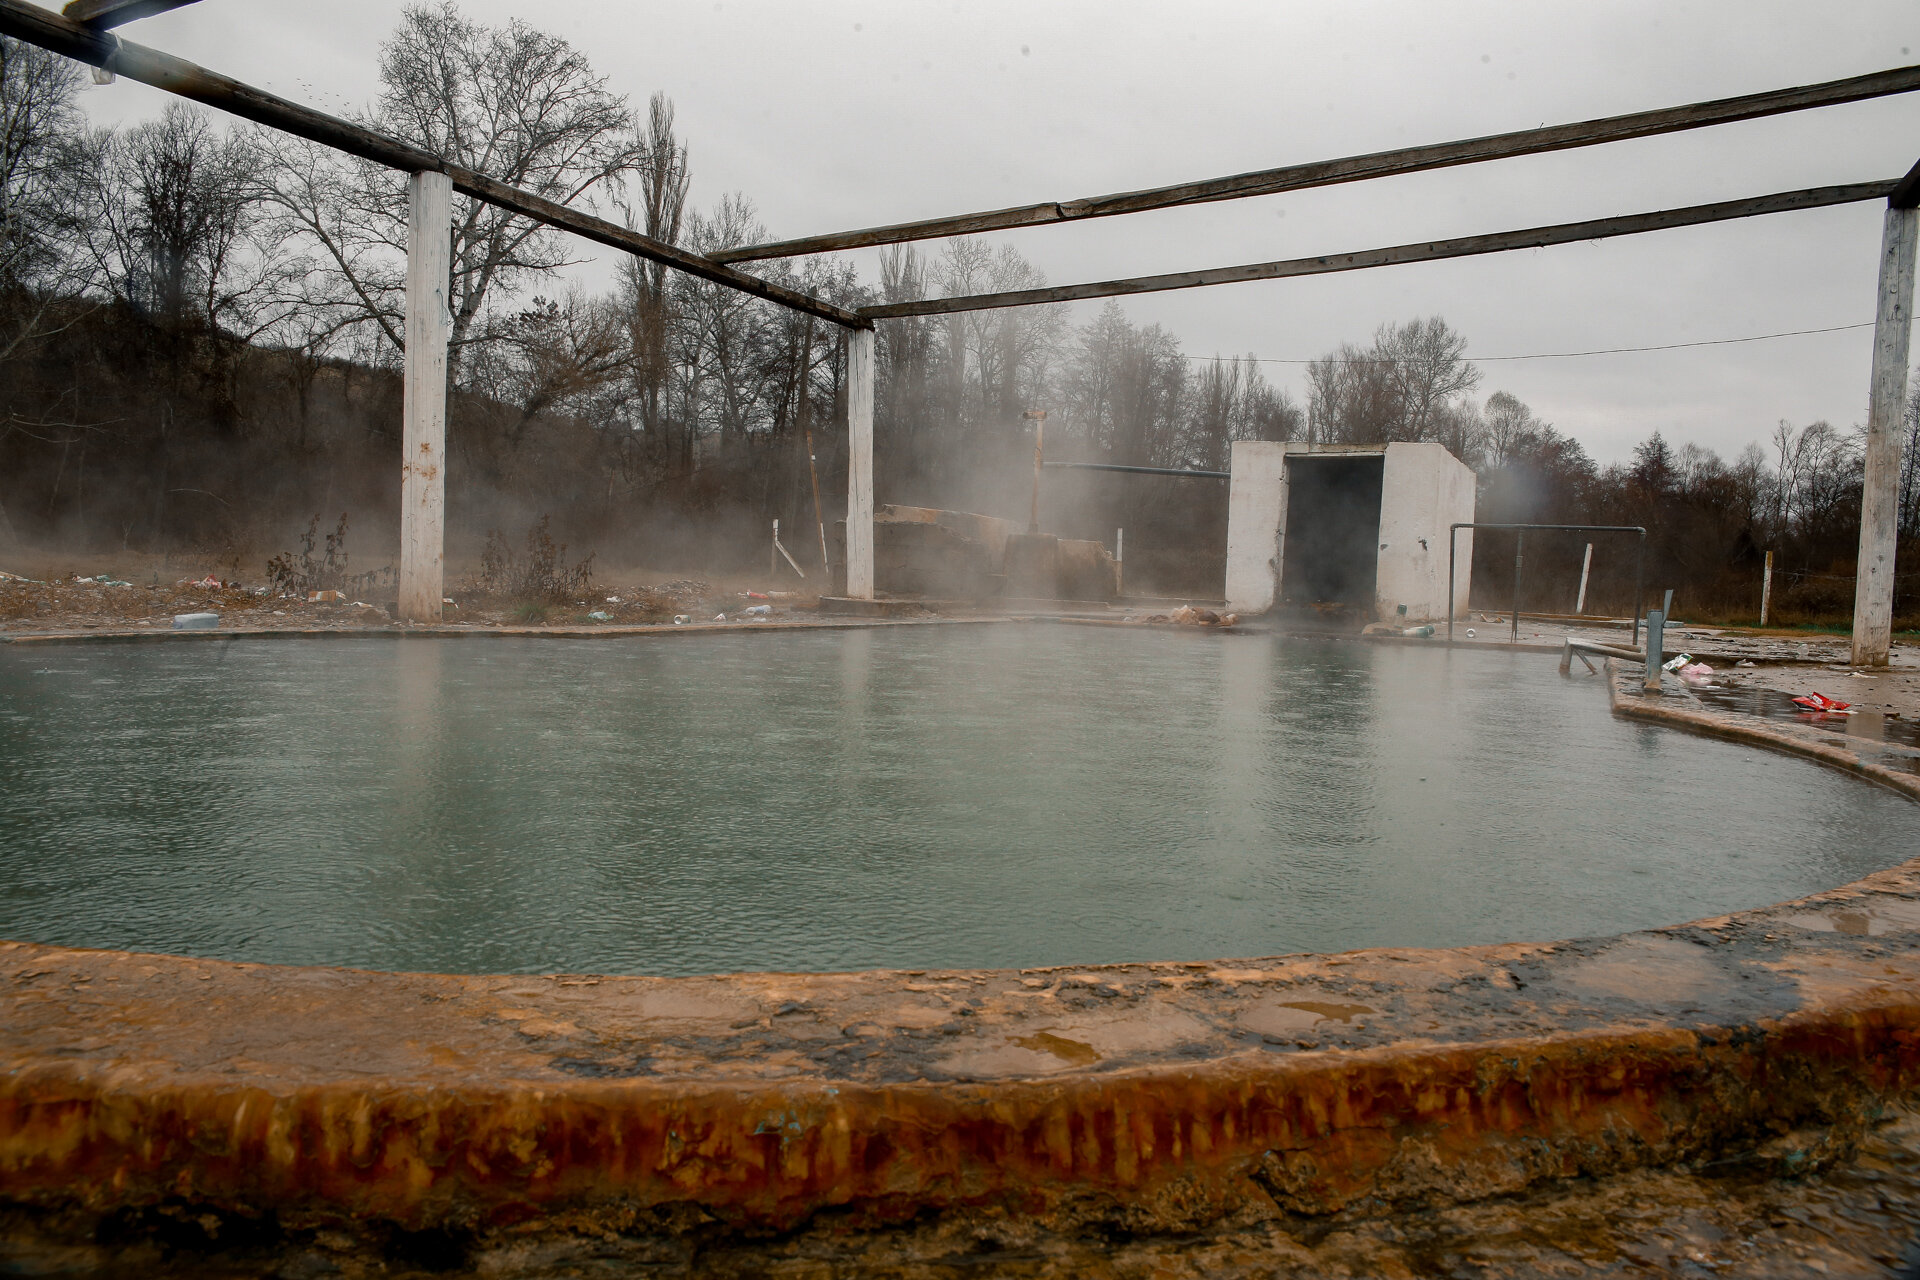 Europe's Best Free Natural Wild Hot Springs Thermal Baths - Strnovac Banja in Macedonia